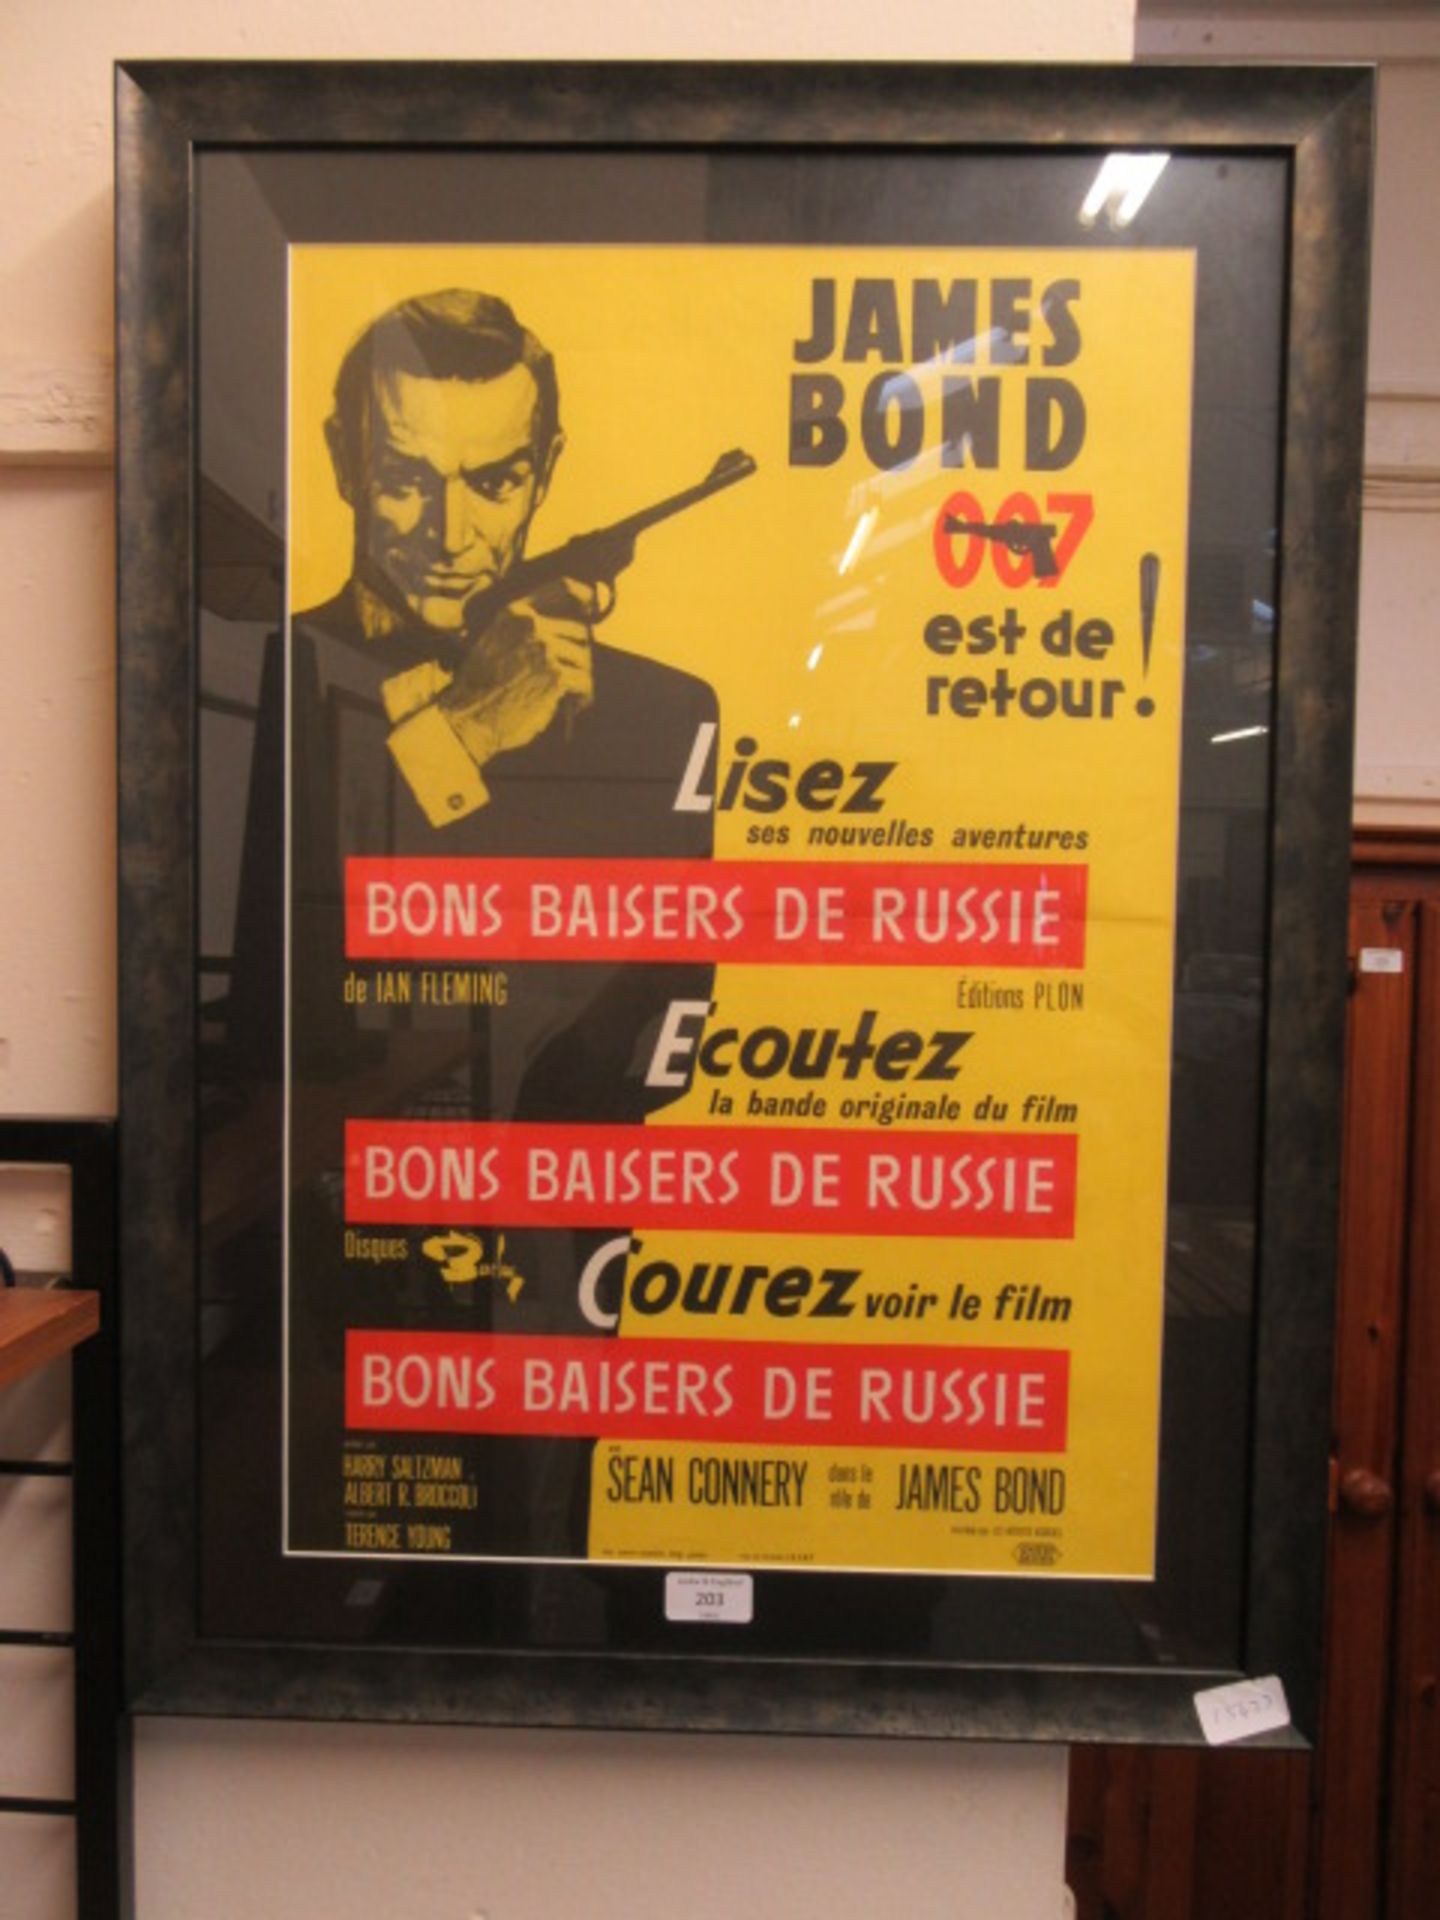 A framed and glazed James Bond advertising poster